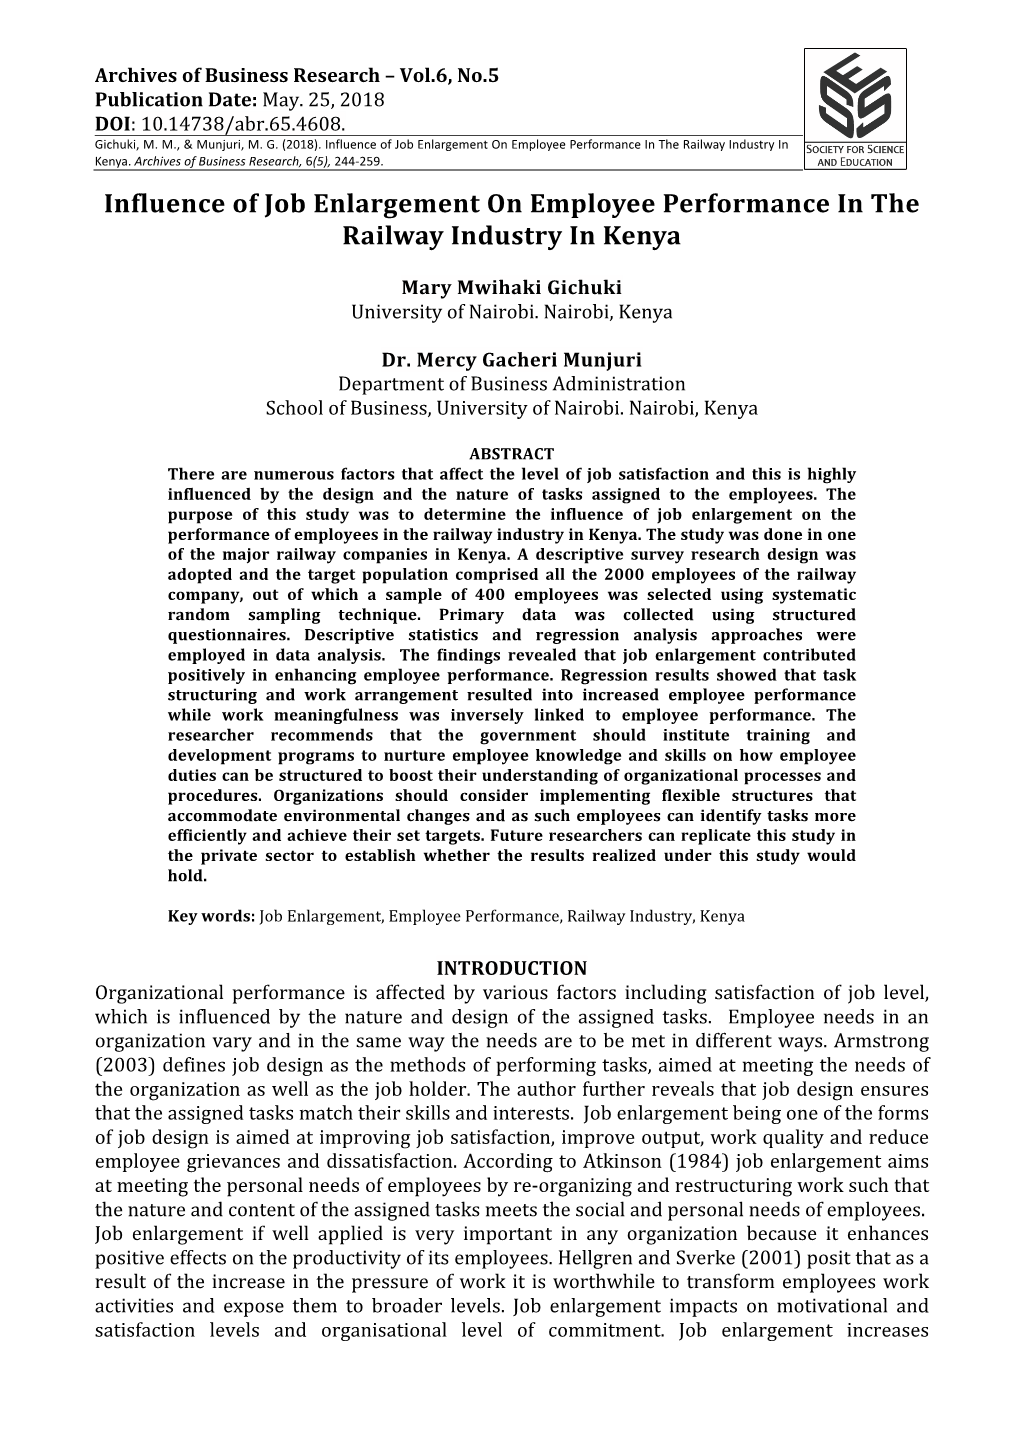 Influence of Job Enlargement on Employee Performance in the Railway Industry in Kenya